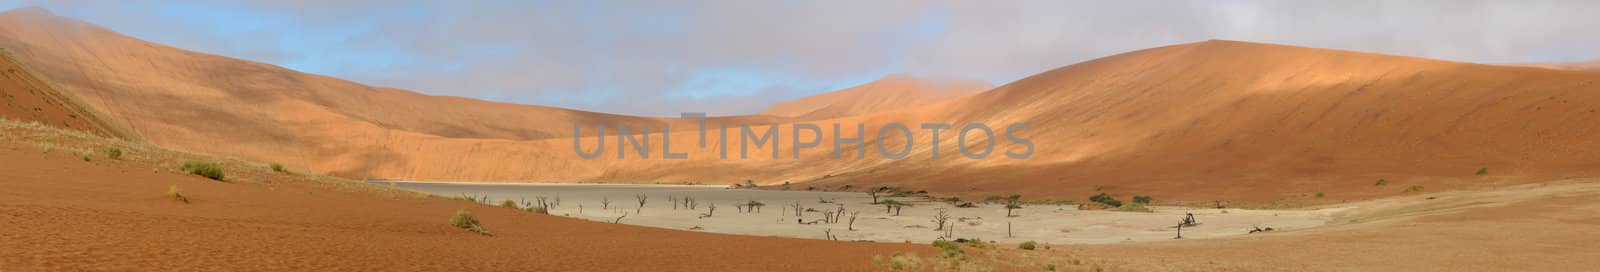 Panorama from four photos at Deadvlei near Sossusvlei,  Namibia